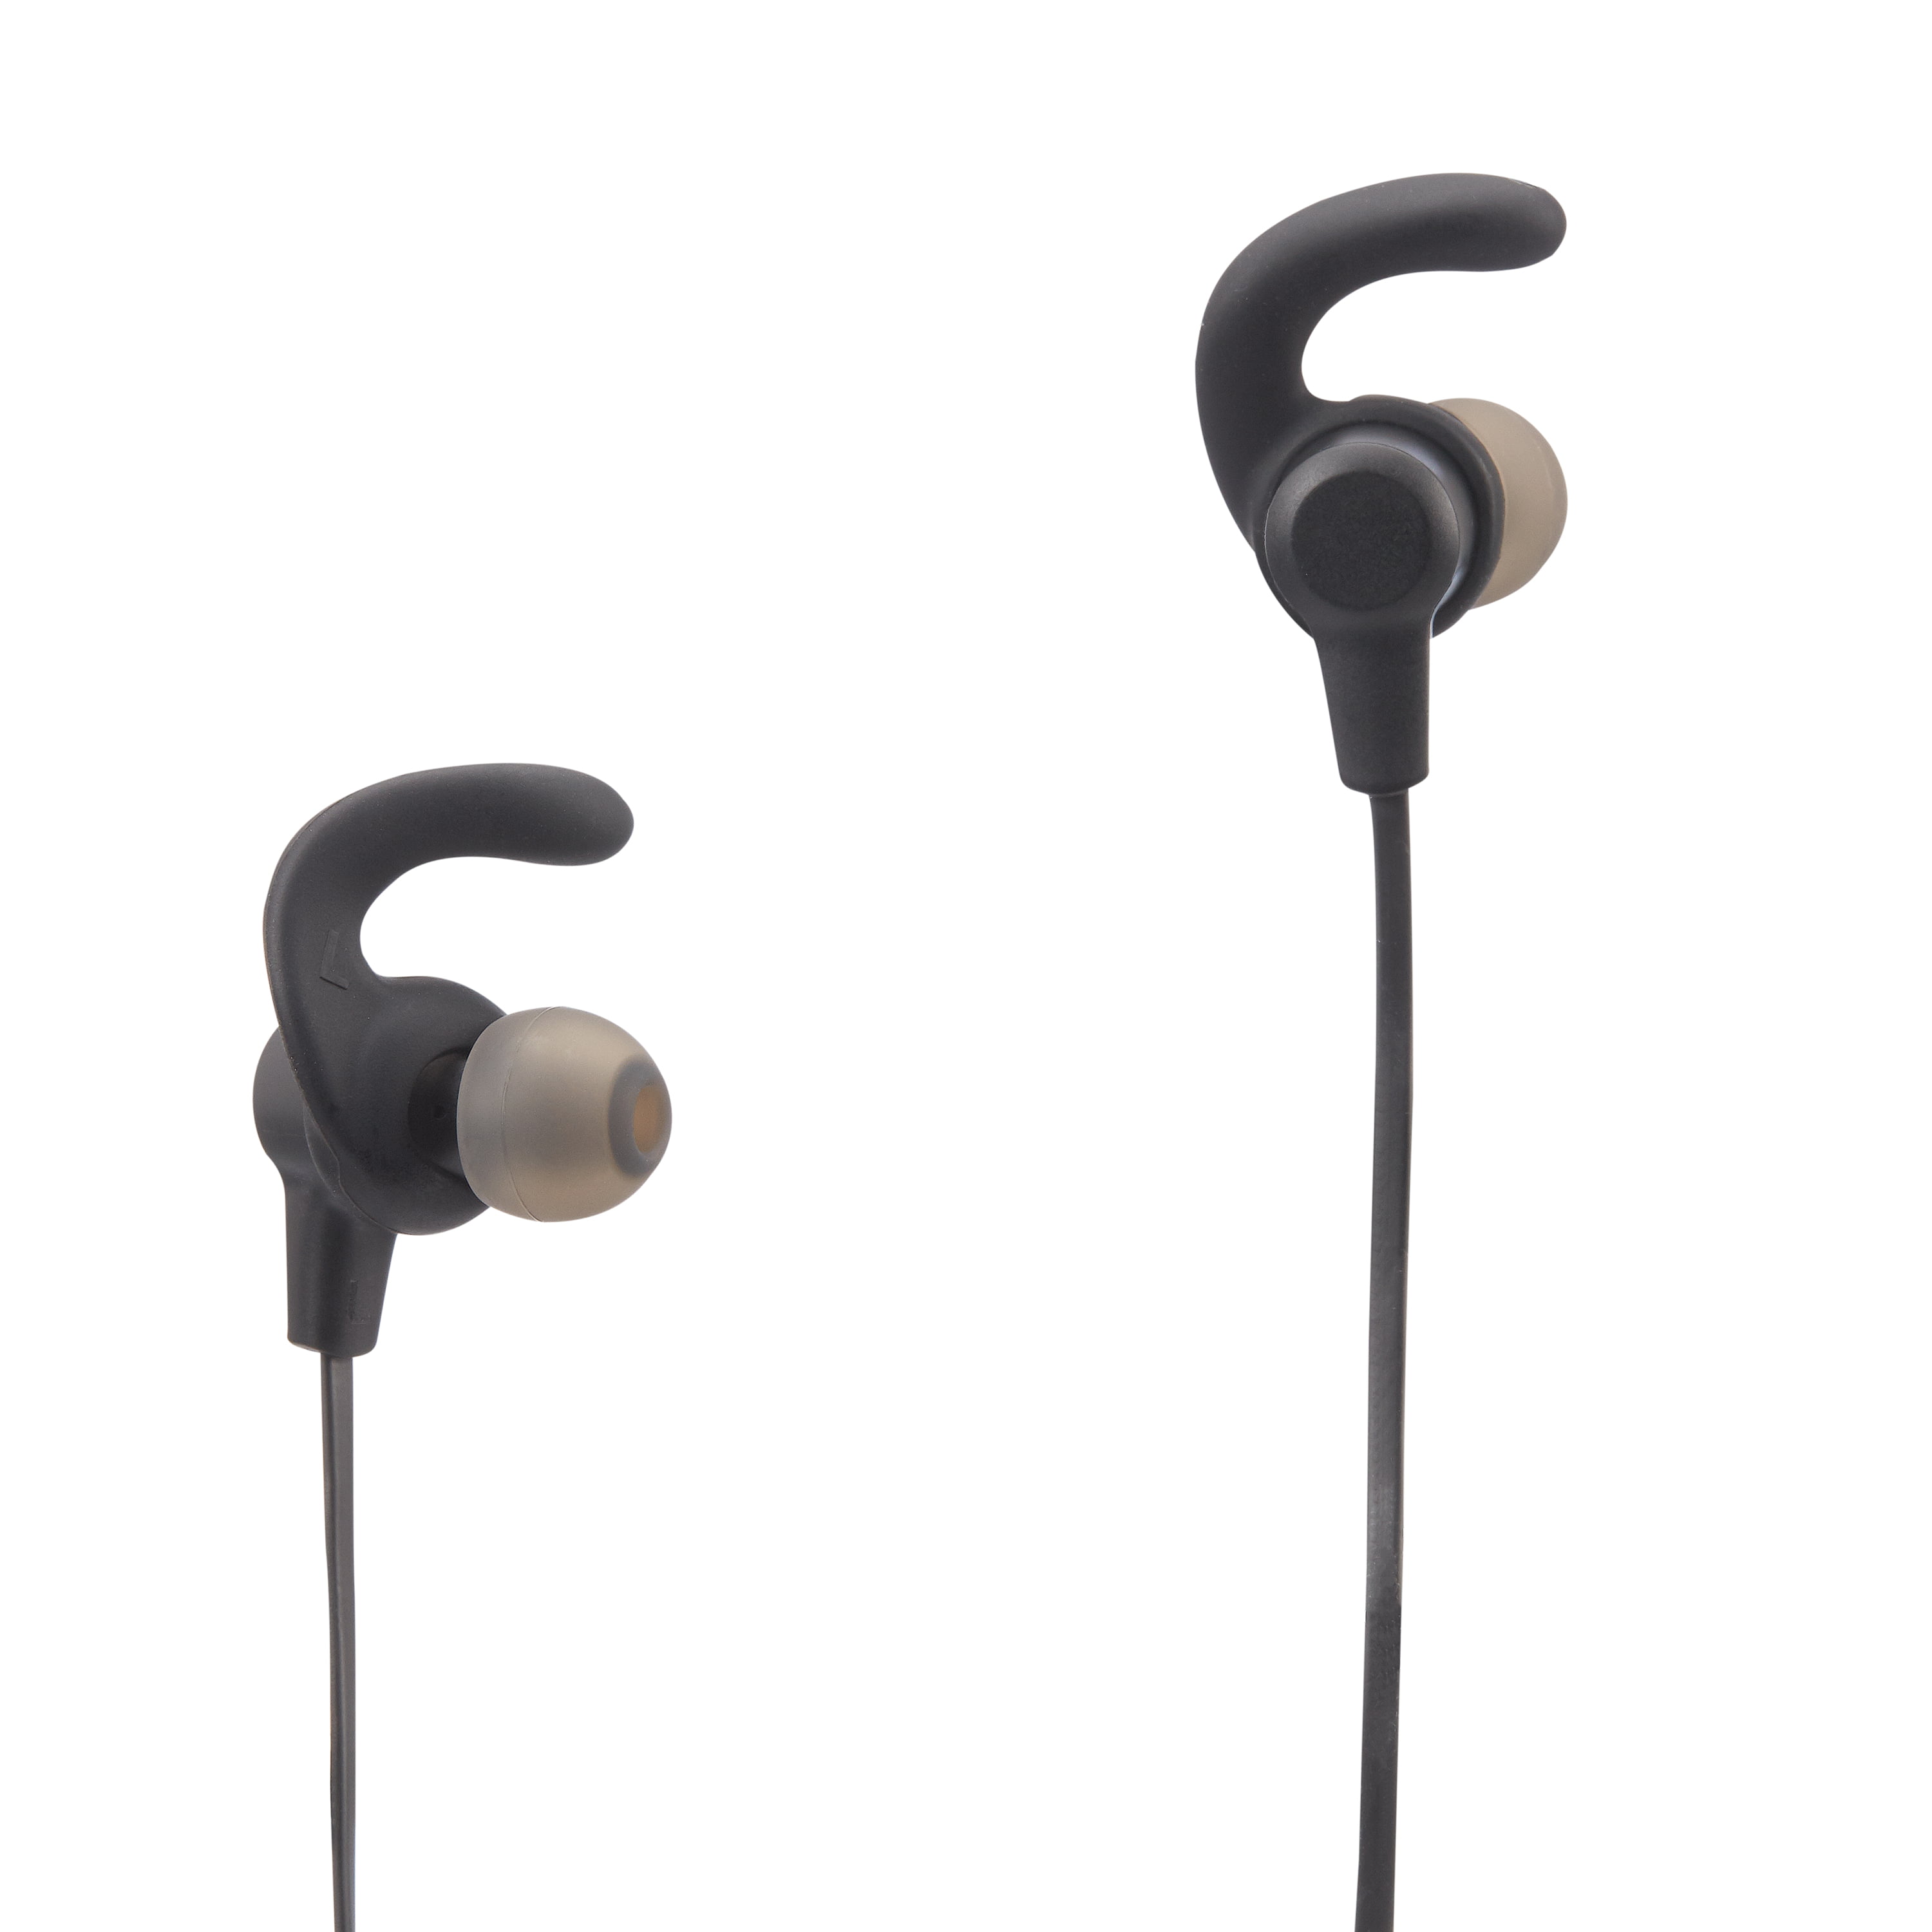 onn. Bluetooth In-Ear Headphones Black $5